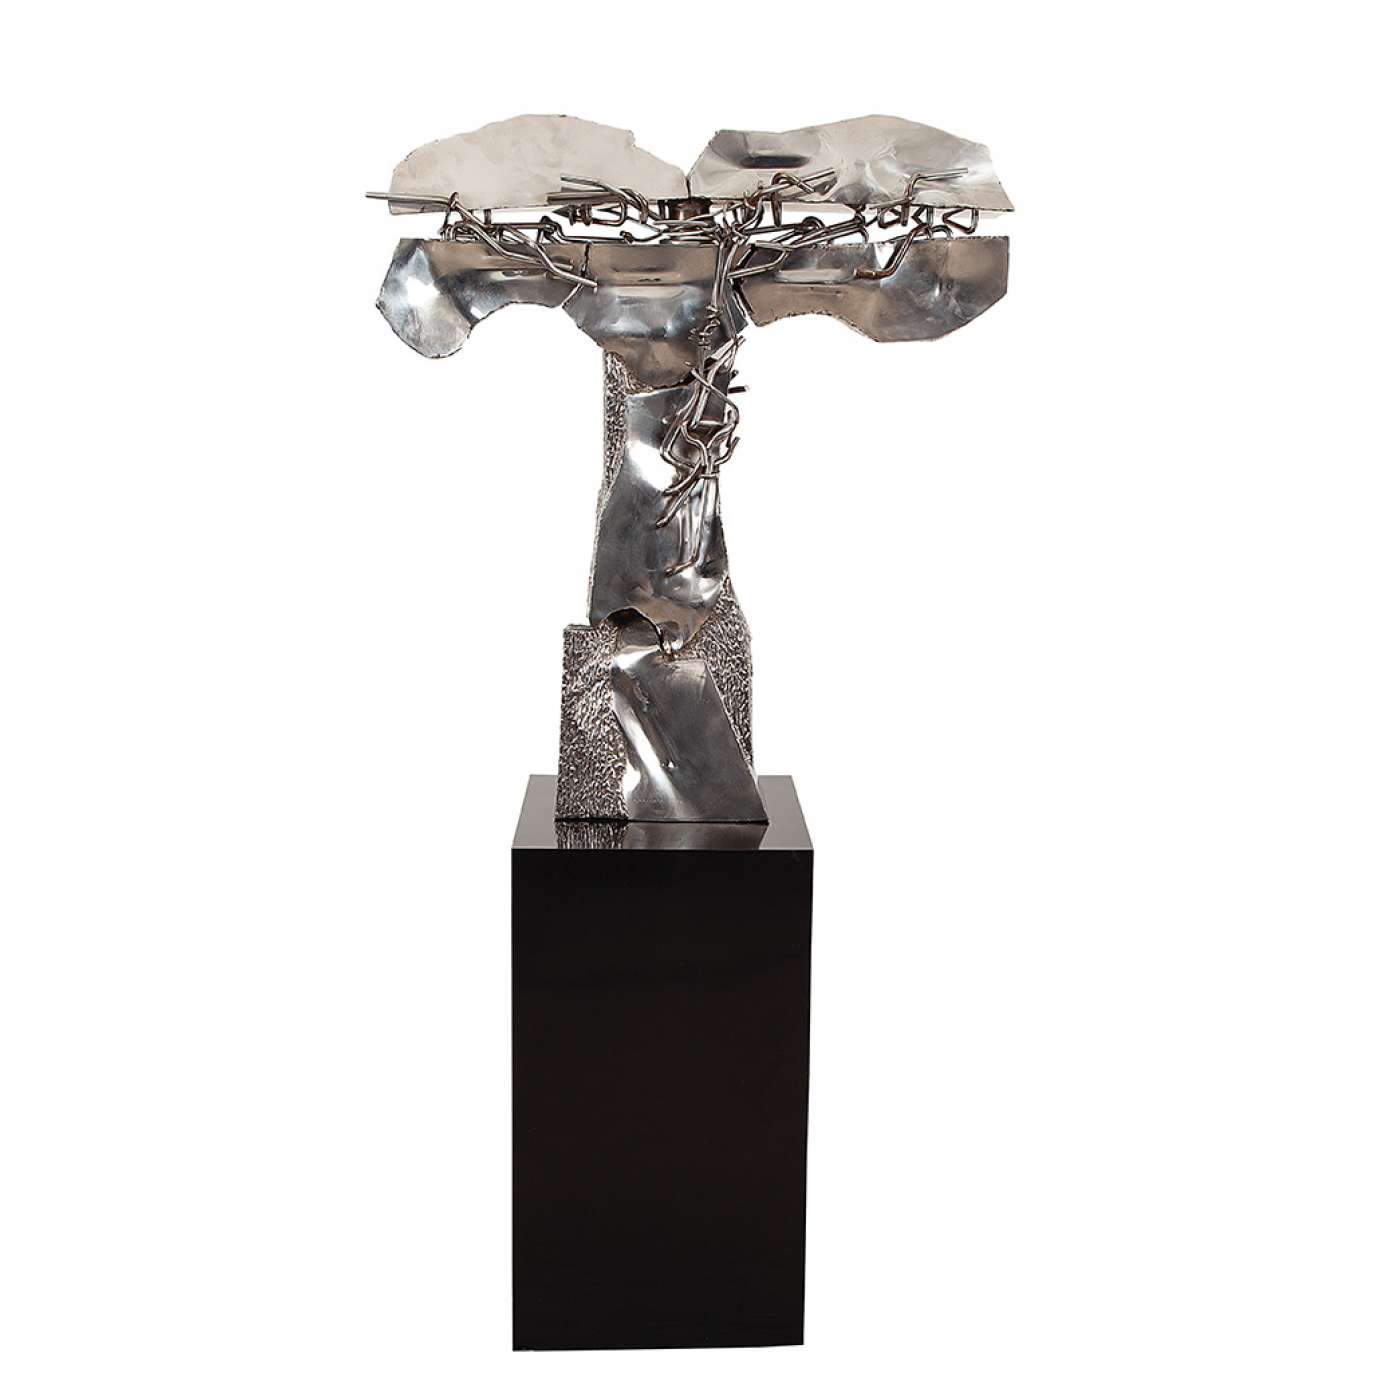 VLAVIANOS - `Sem título` -Escultura de metal - Assinada - 1974 - 97 x 88 cm. - Altura 97 cm - Largura 88 cm